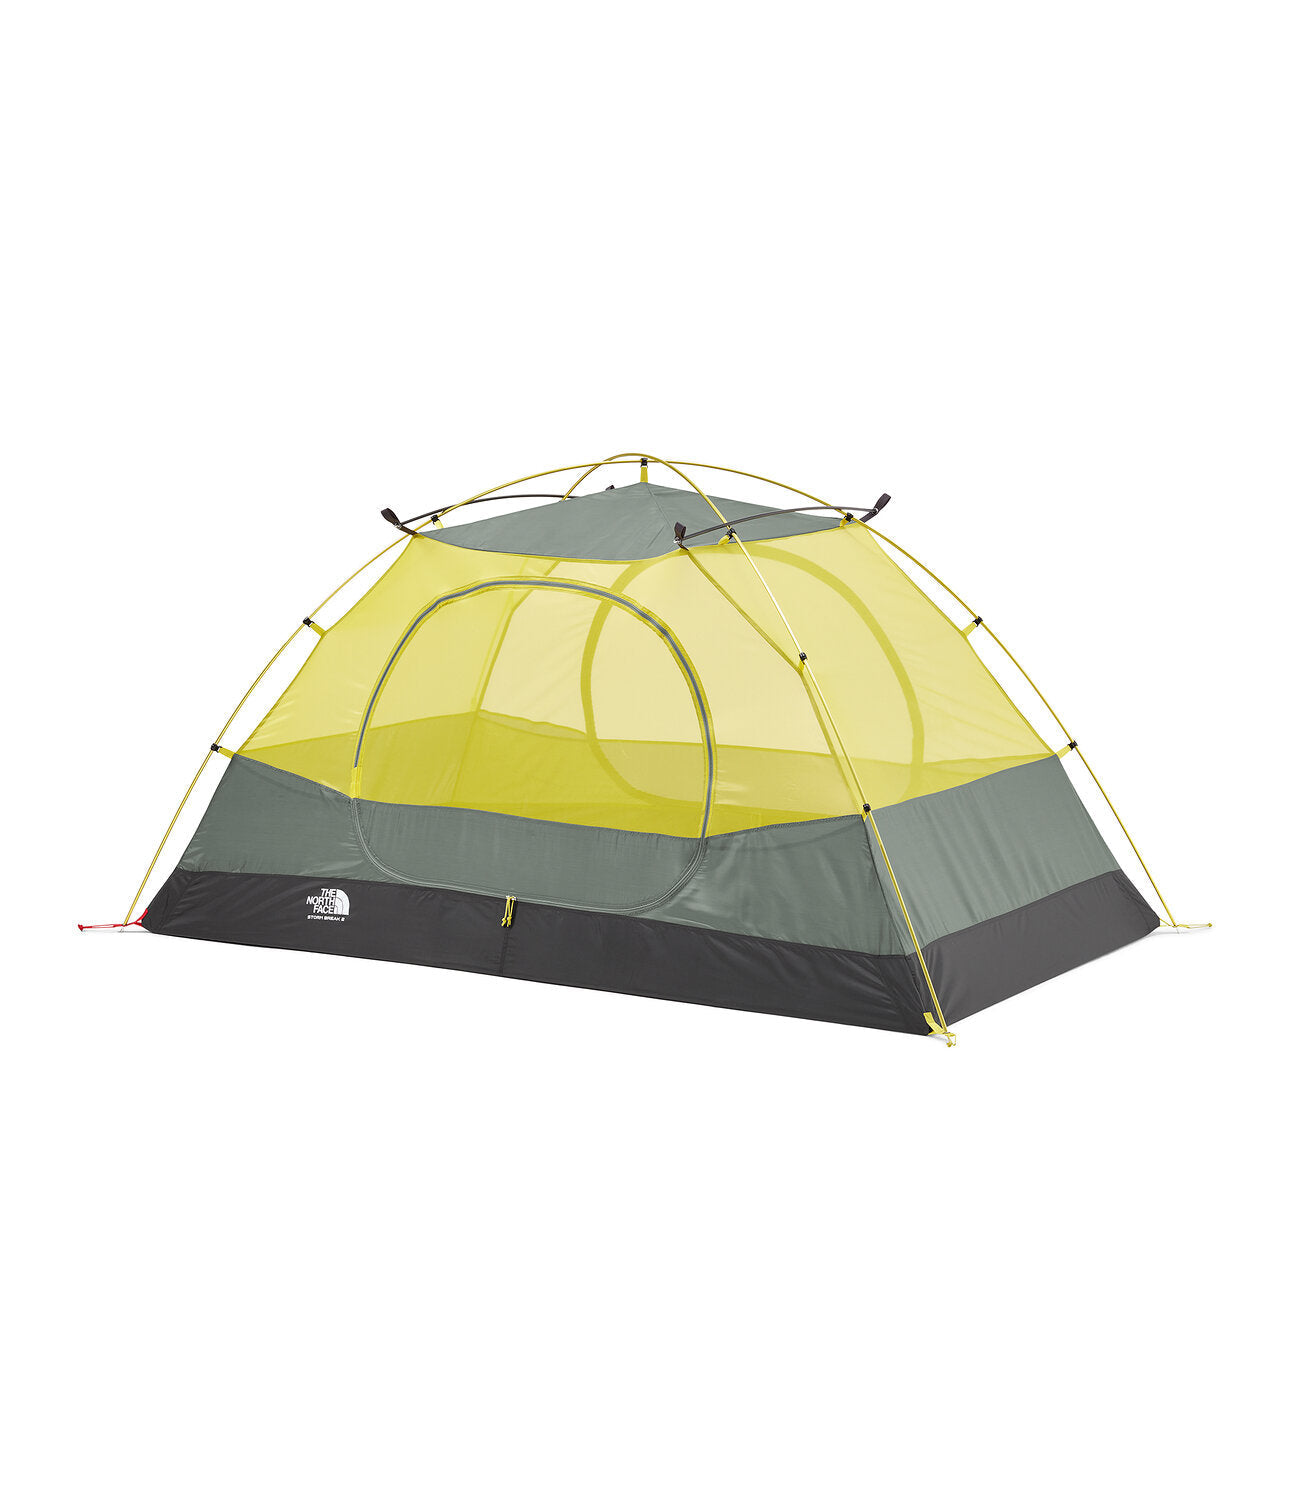 The North Face Stormbreak 2 Person Tent